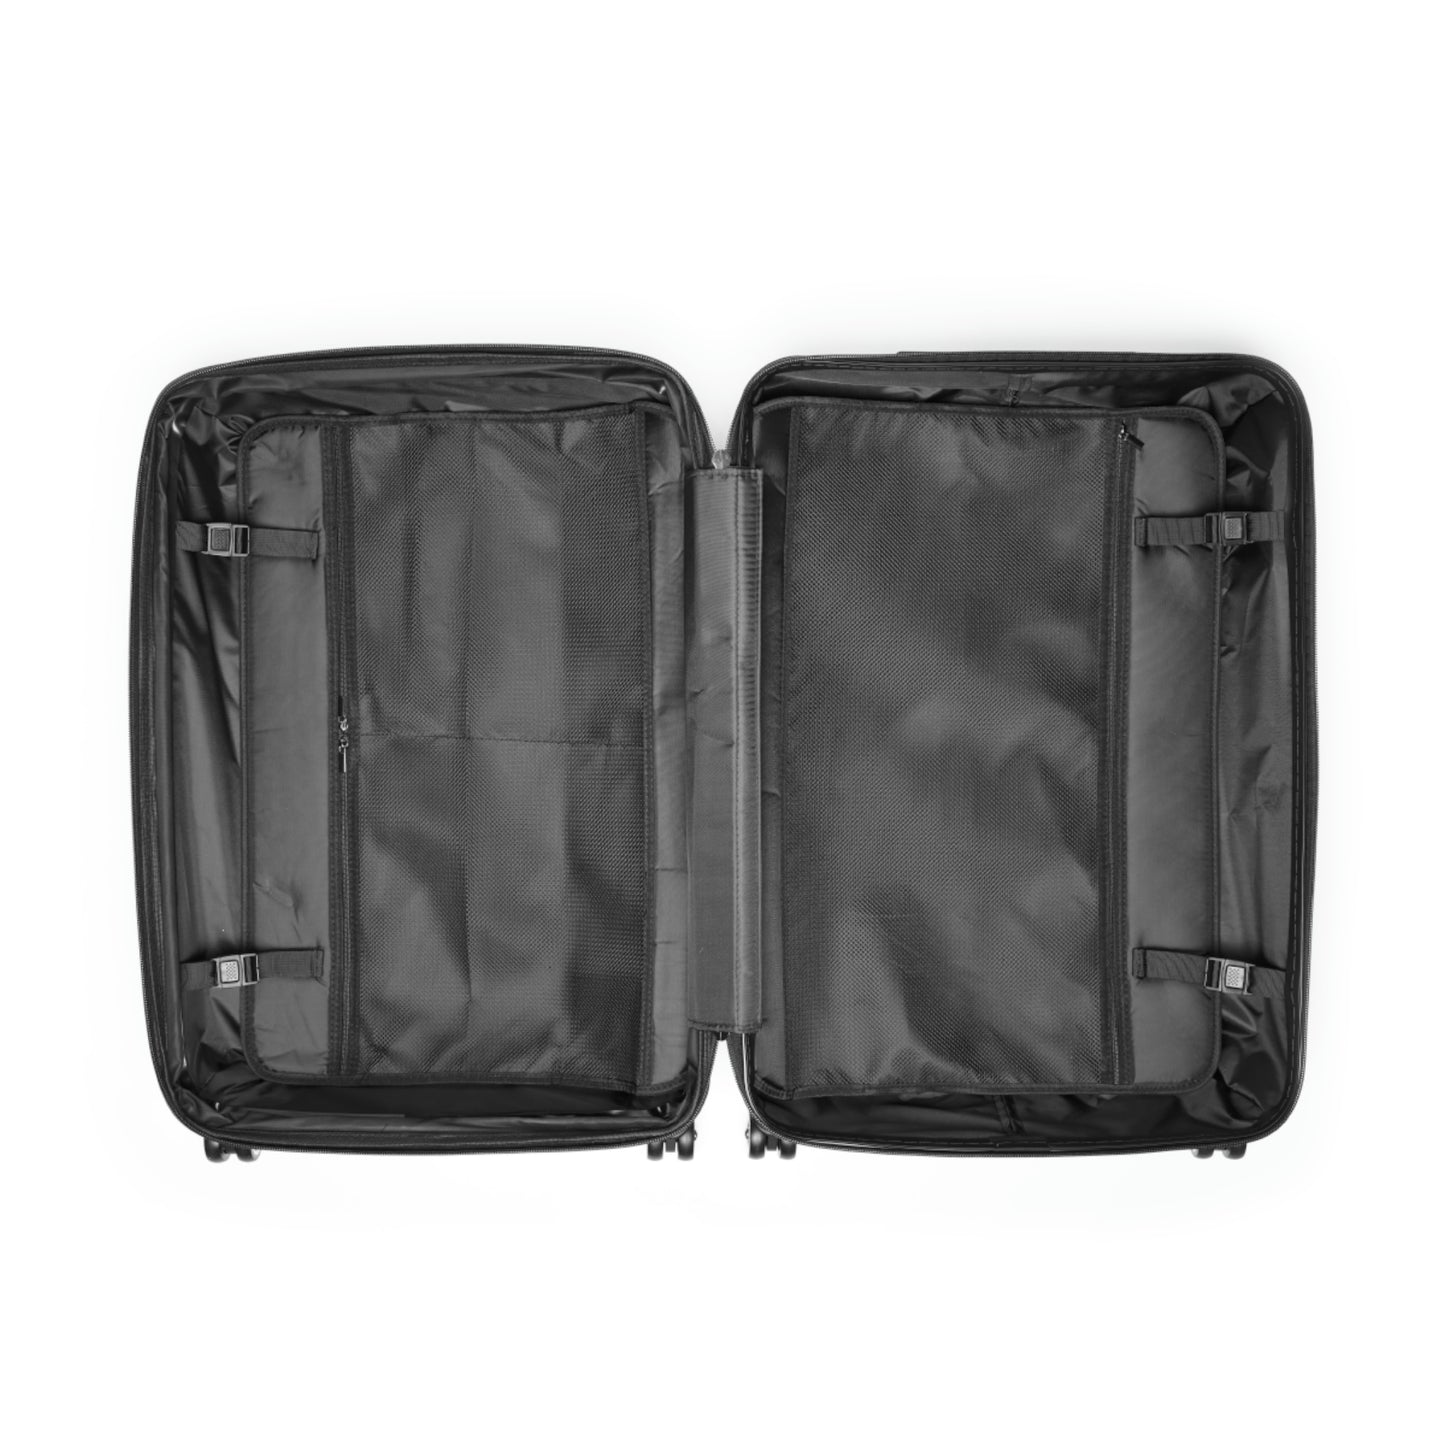 Floral Suitcase, Custom Luggage / Rose Print Travel Bag